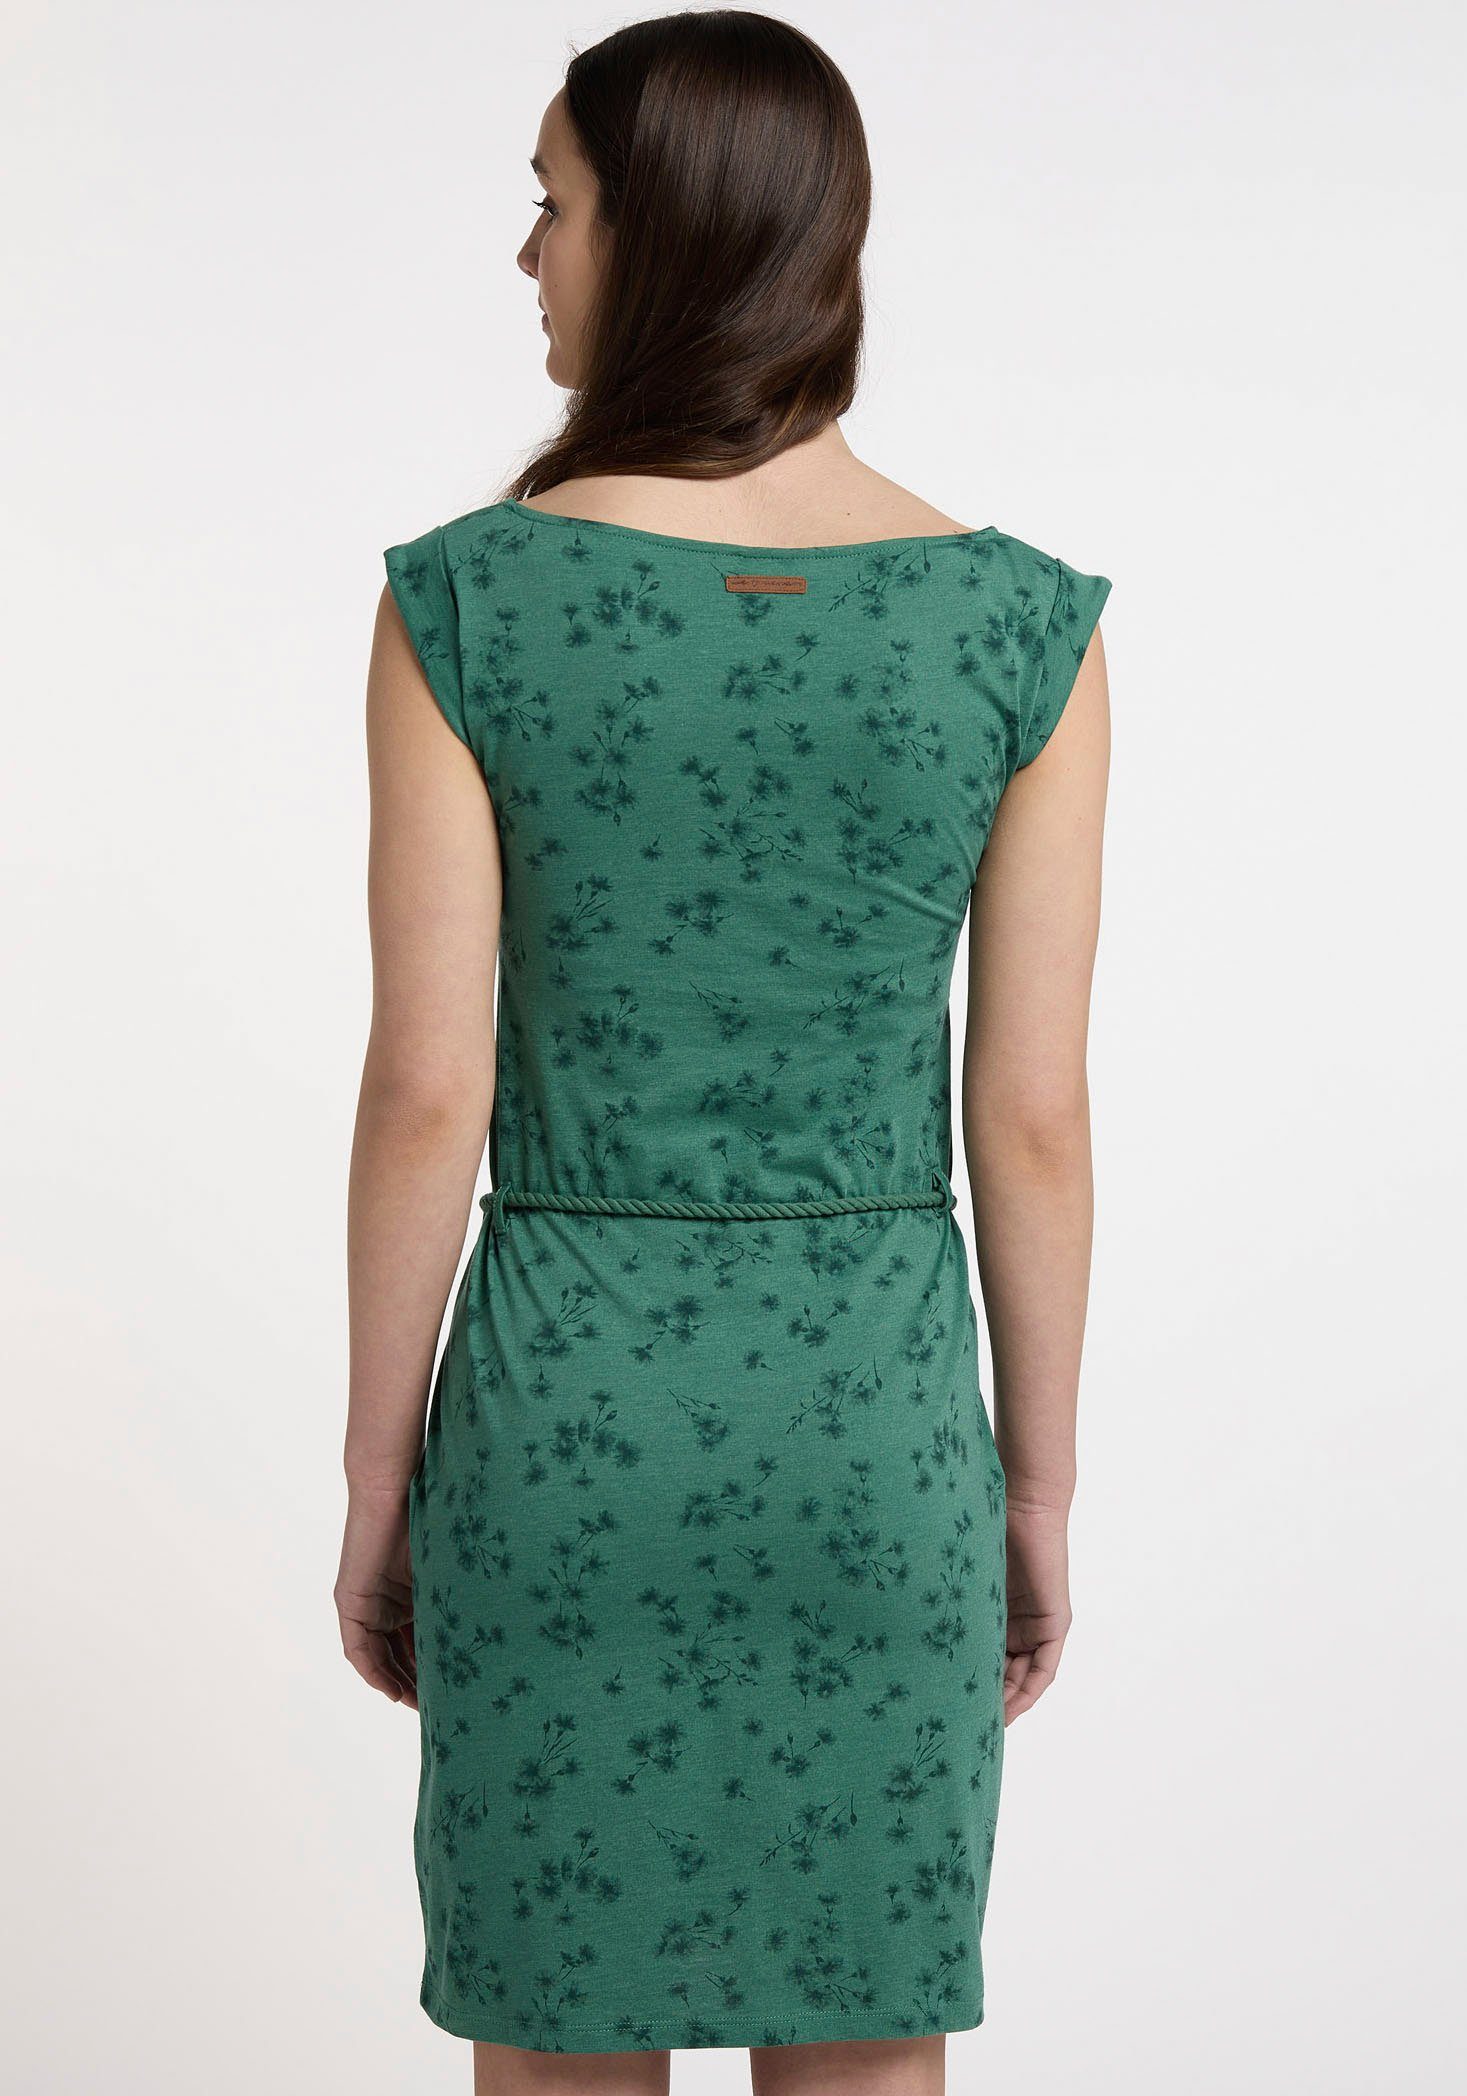 Ragwear Jerseykleid TAGG im 5023 BLUETE Allover-Print green floralen